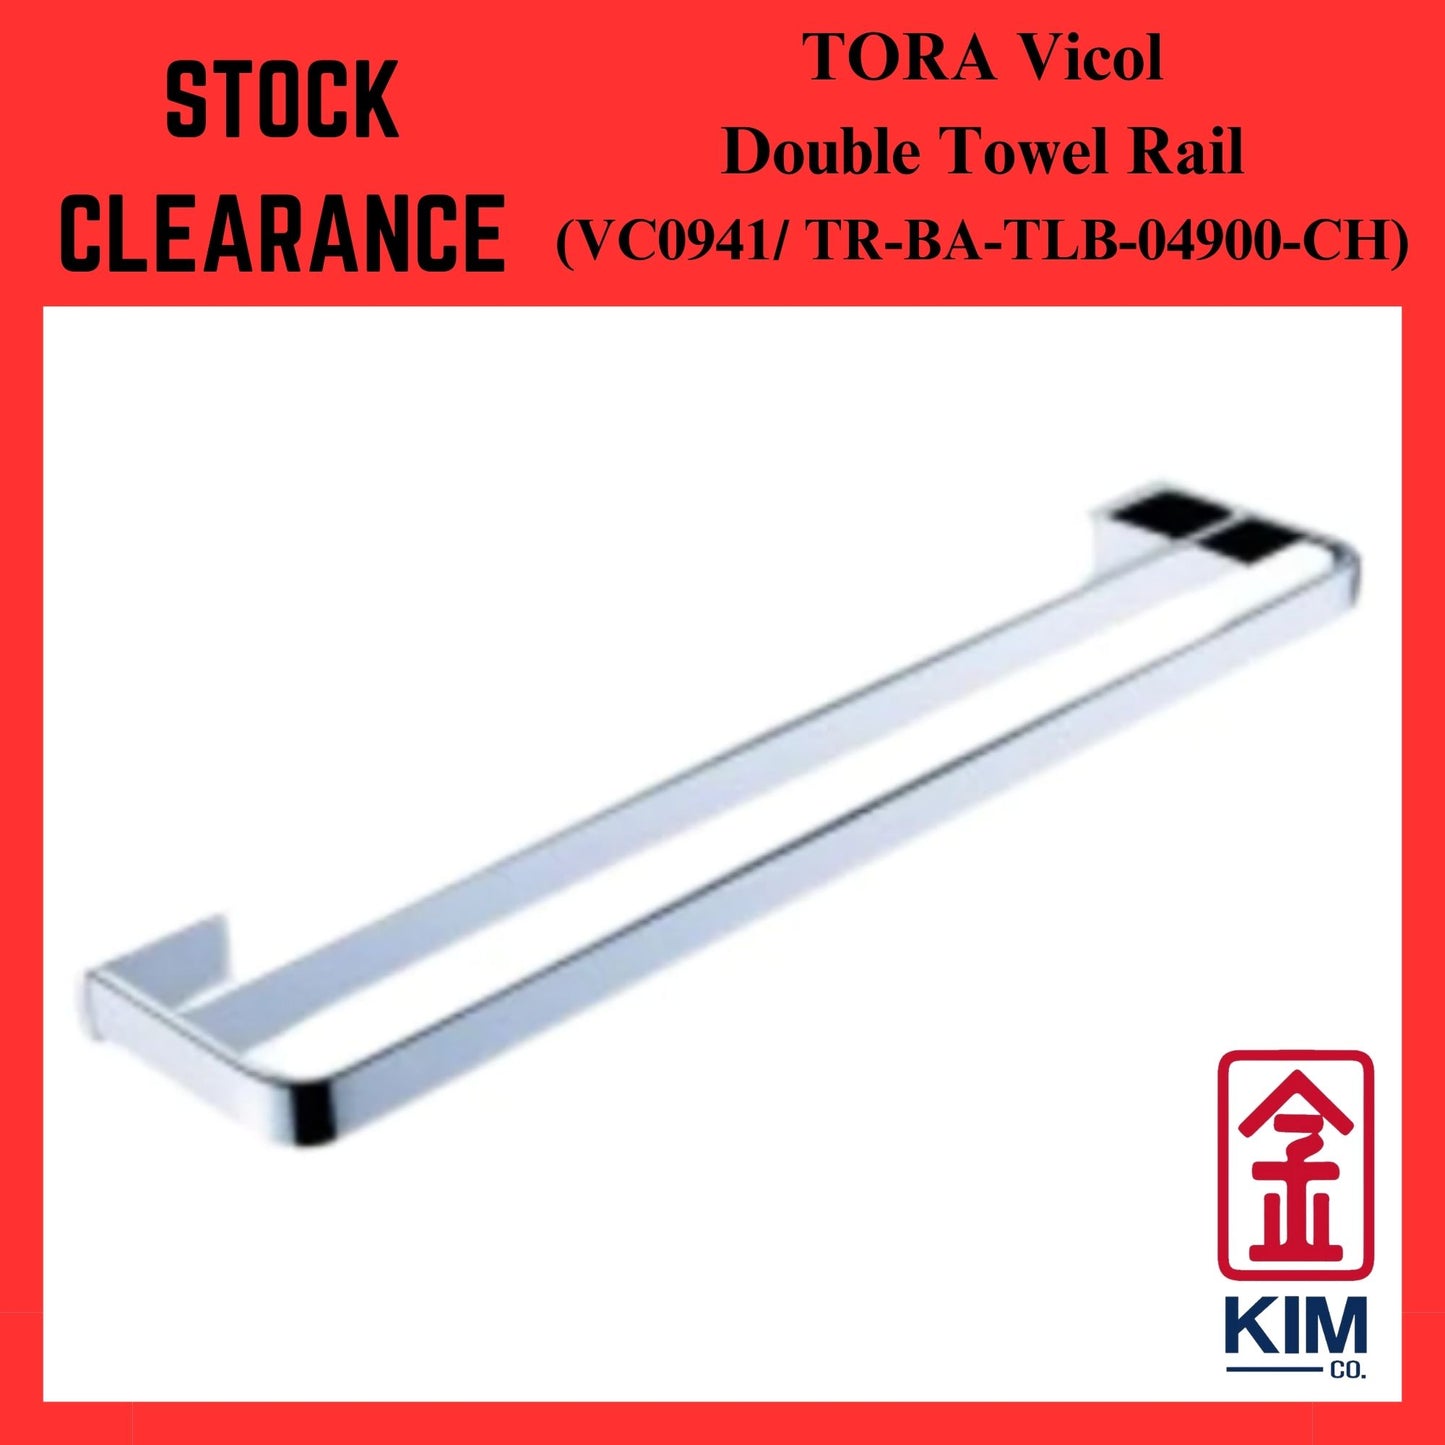 ( Stock Clearance ) Tora Vicol Brass Chrome Double Towel Rail (VC0941/ TR-BA-TLB-04900-CH)